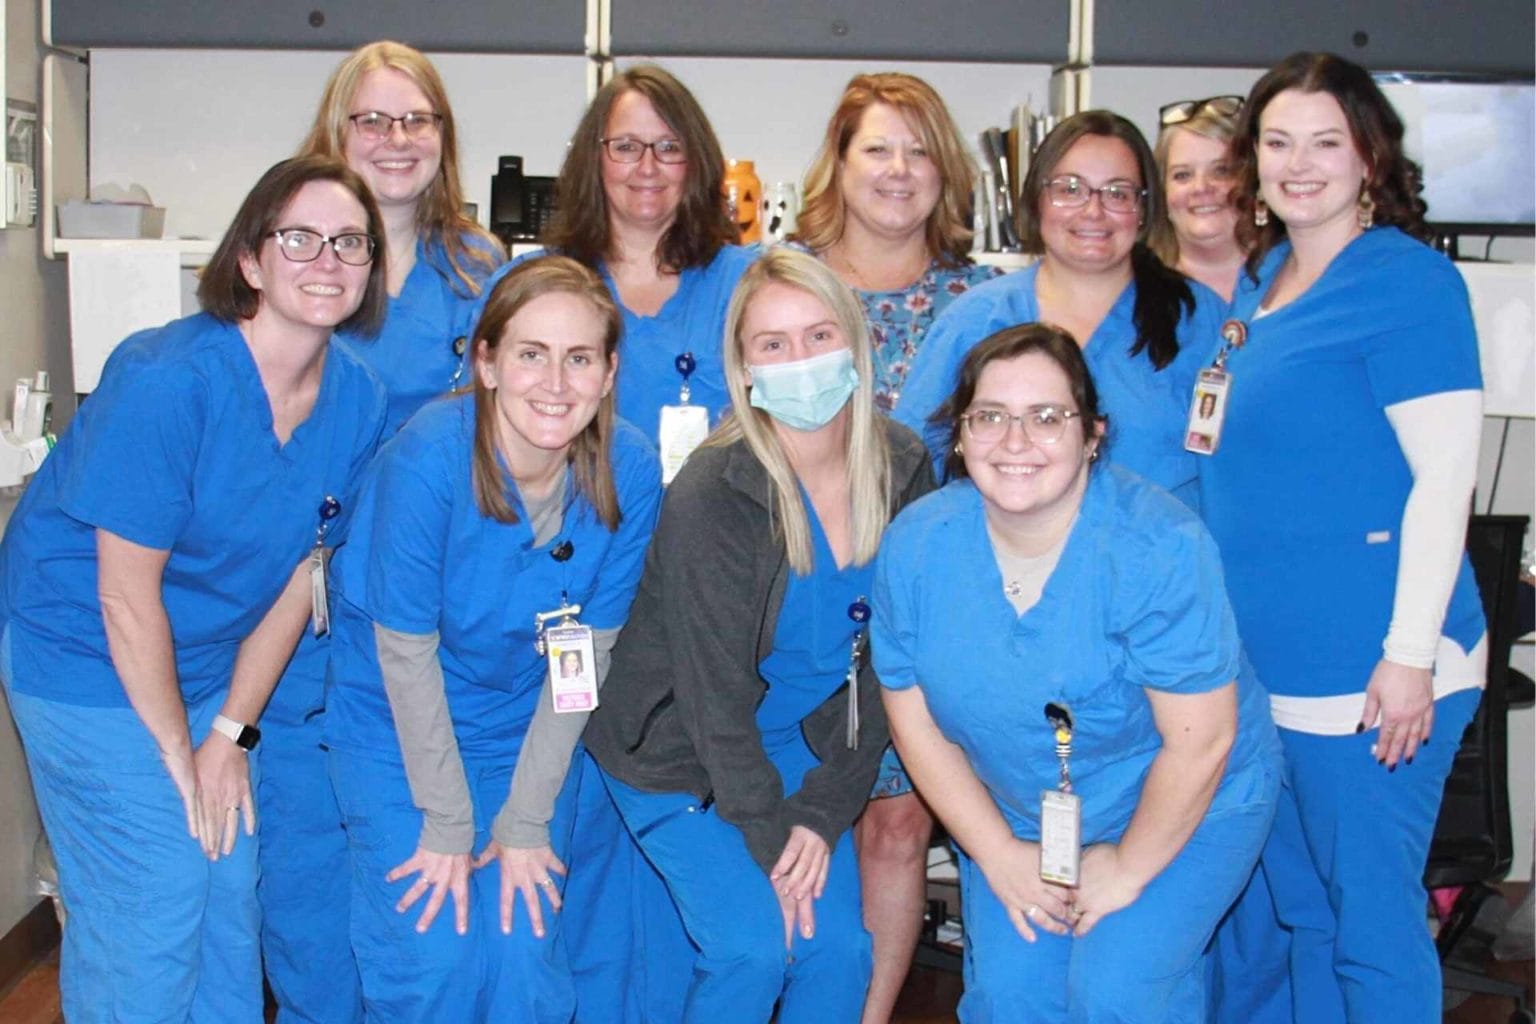 St. Joseph's Hospital recognizes perinatal nurses during National